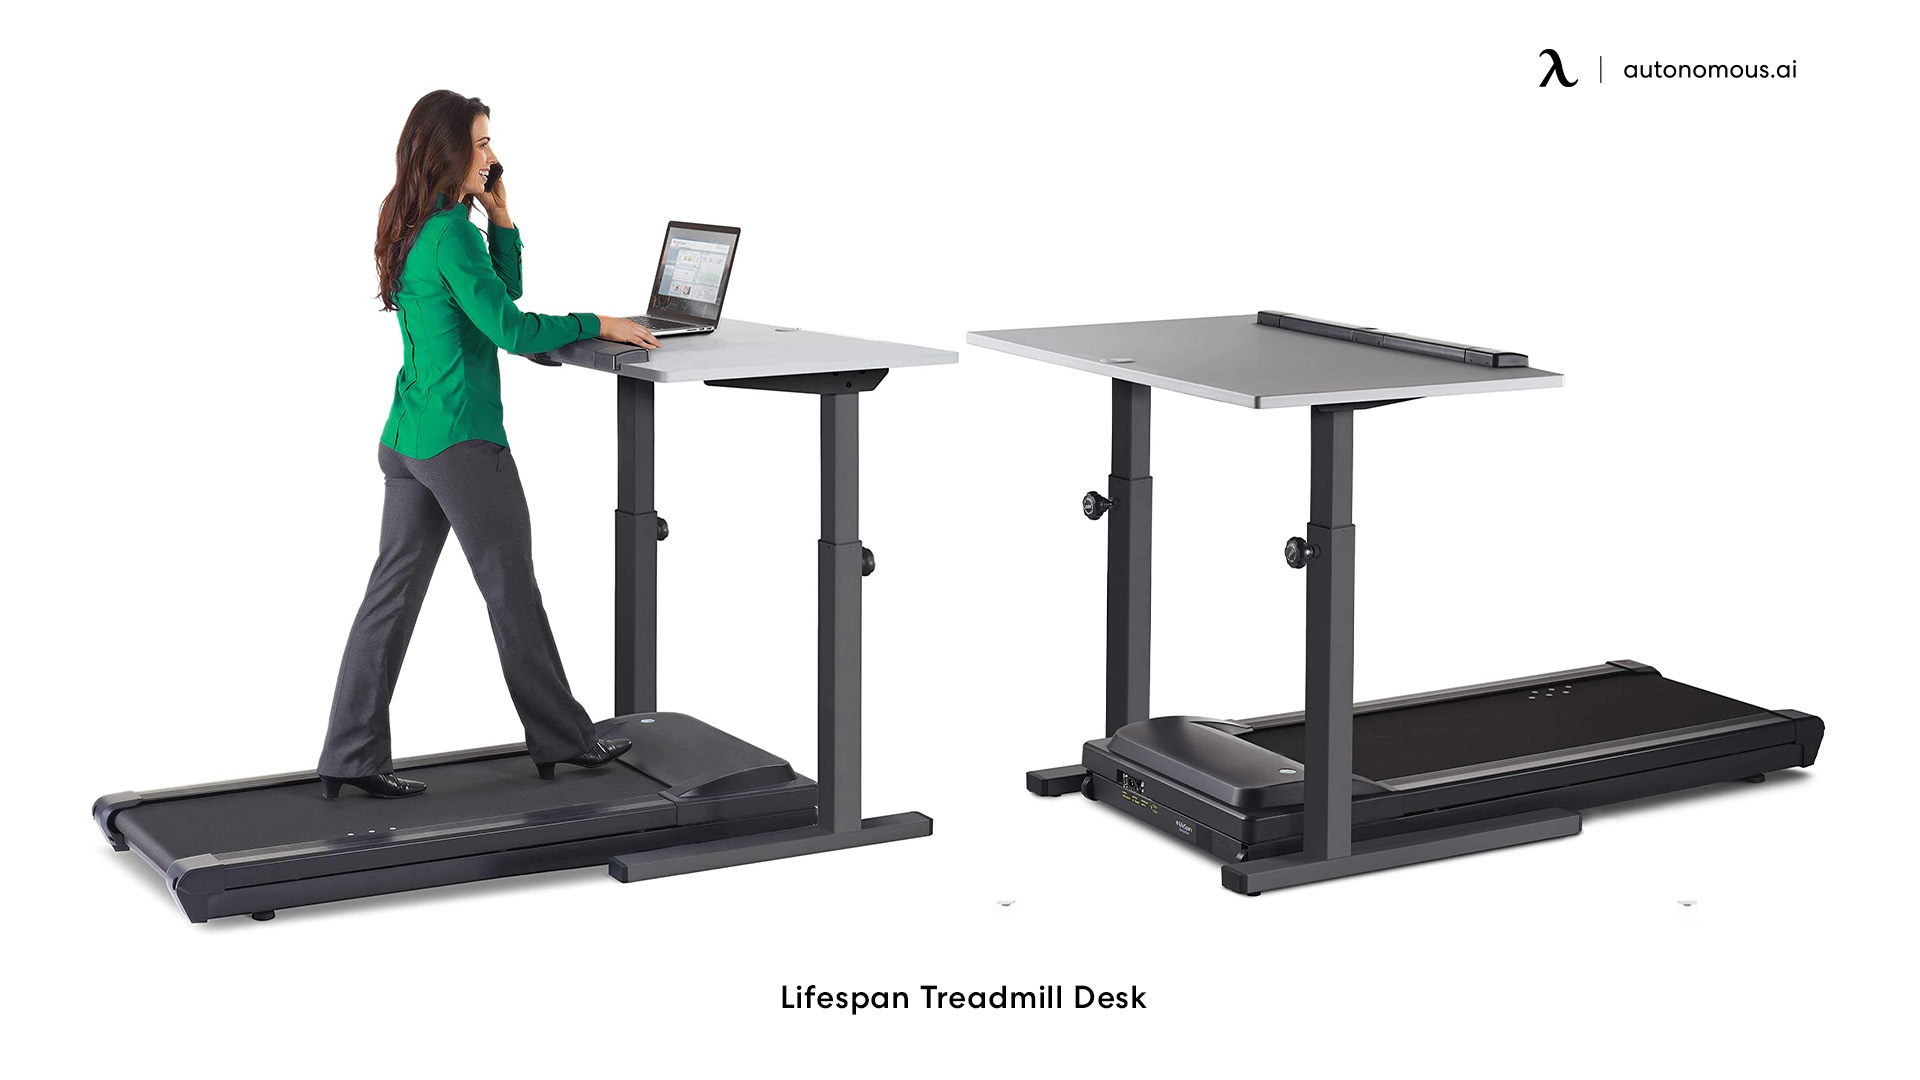 Lifespan Treadmill Desk home office desk ideas